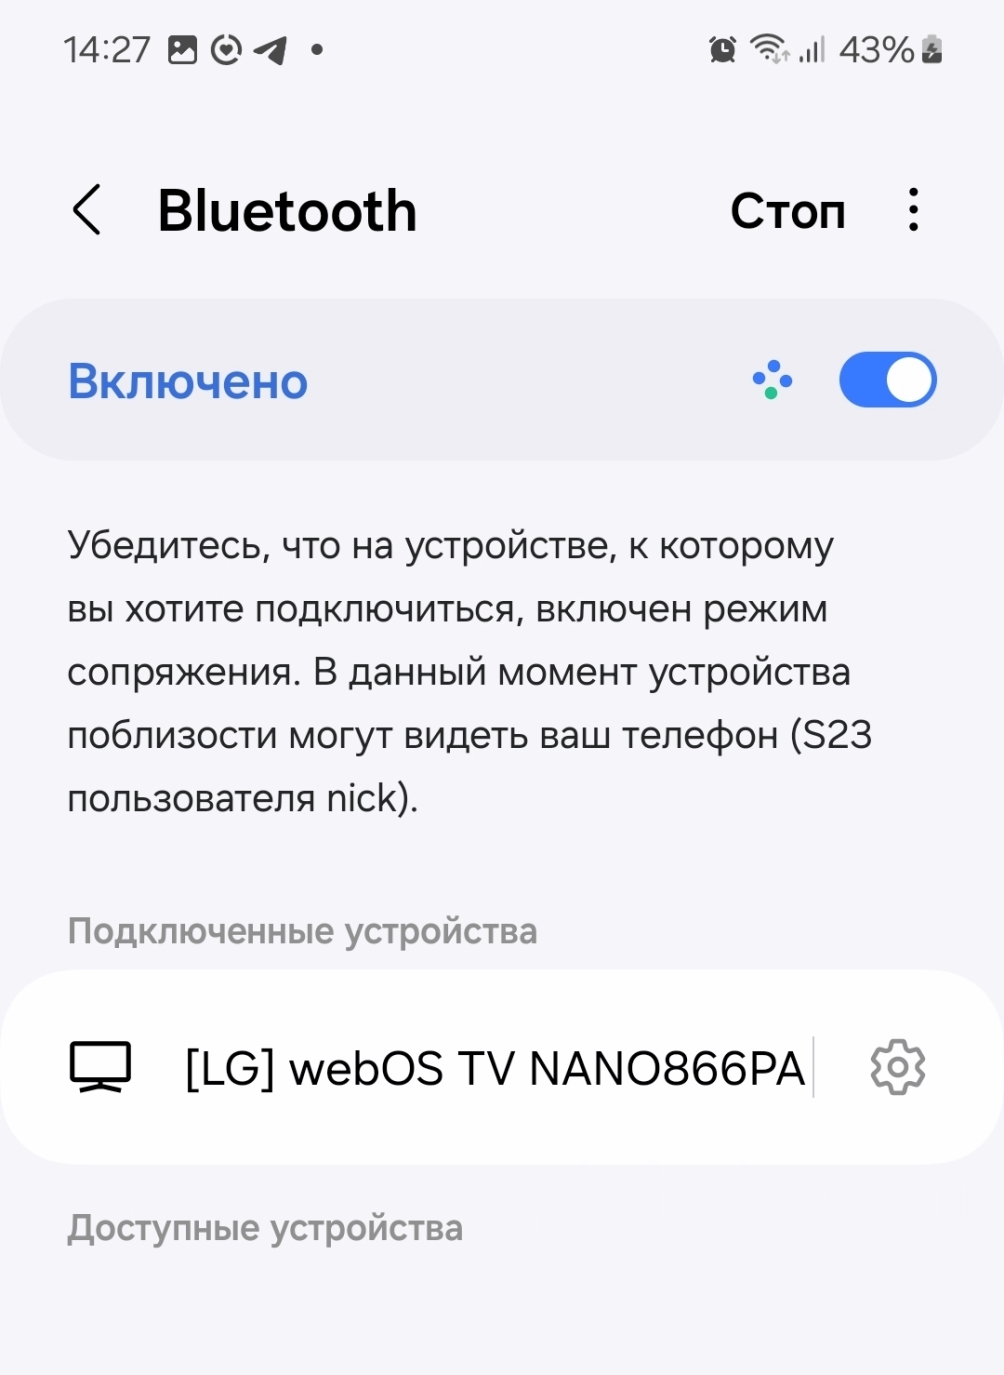 Подключение телевизора к смарфтону по Bluetooth